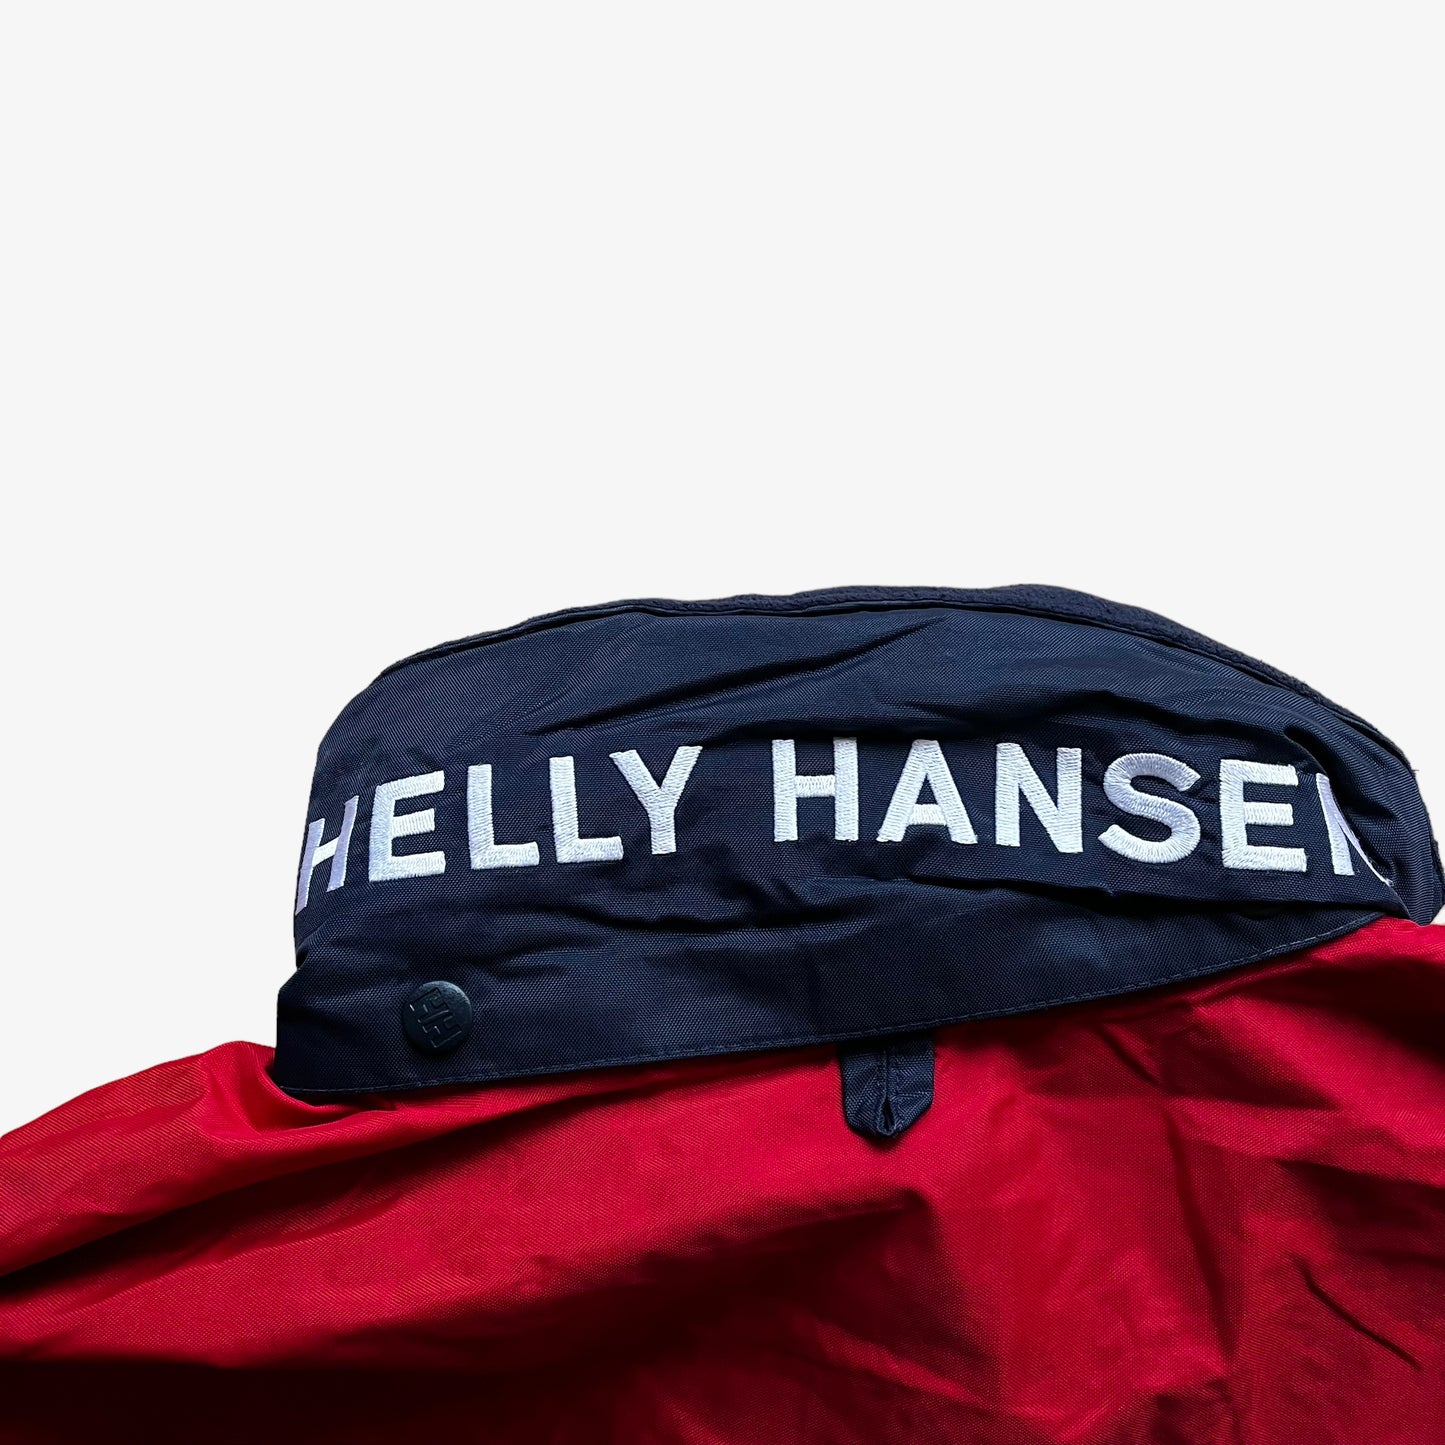 Vintage 90s Helly Hansen Red And Navy Sailing Jacket Collar - Casspios Dream